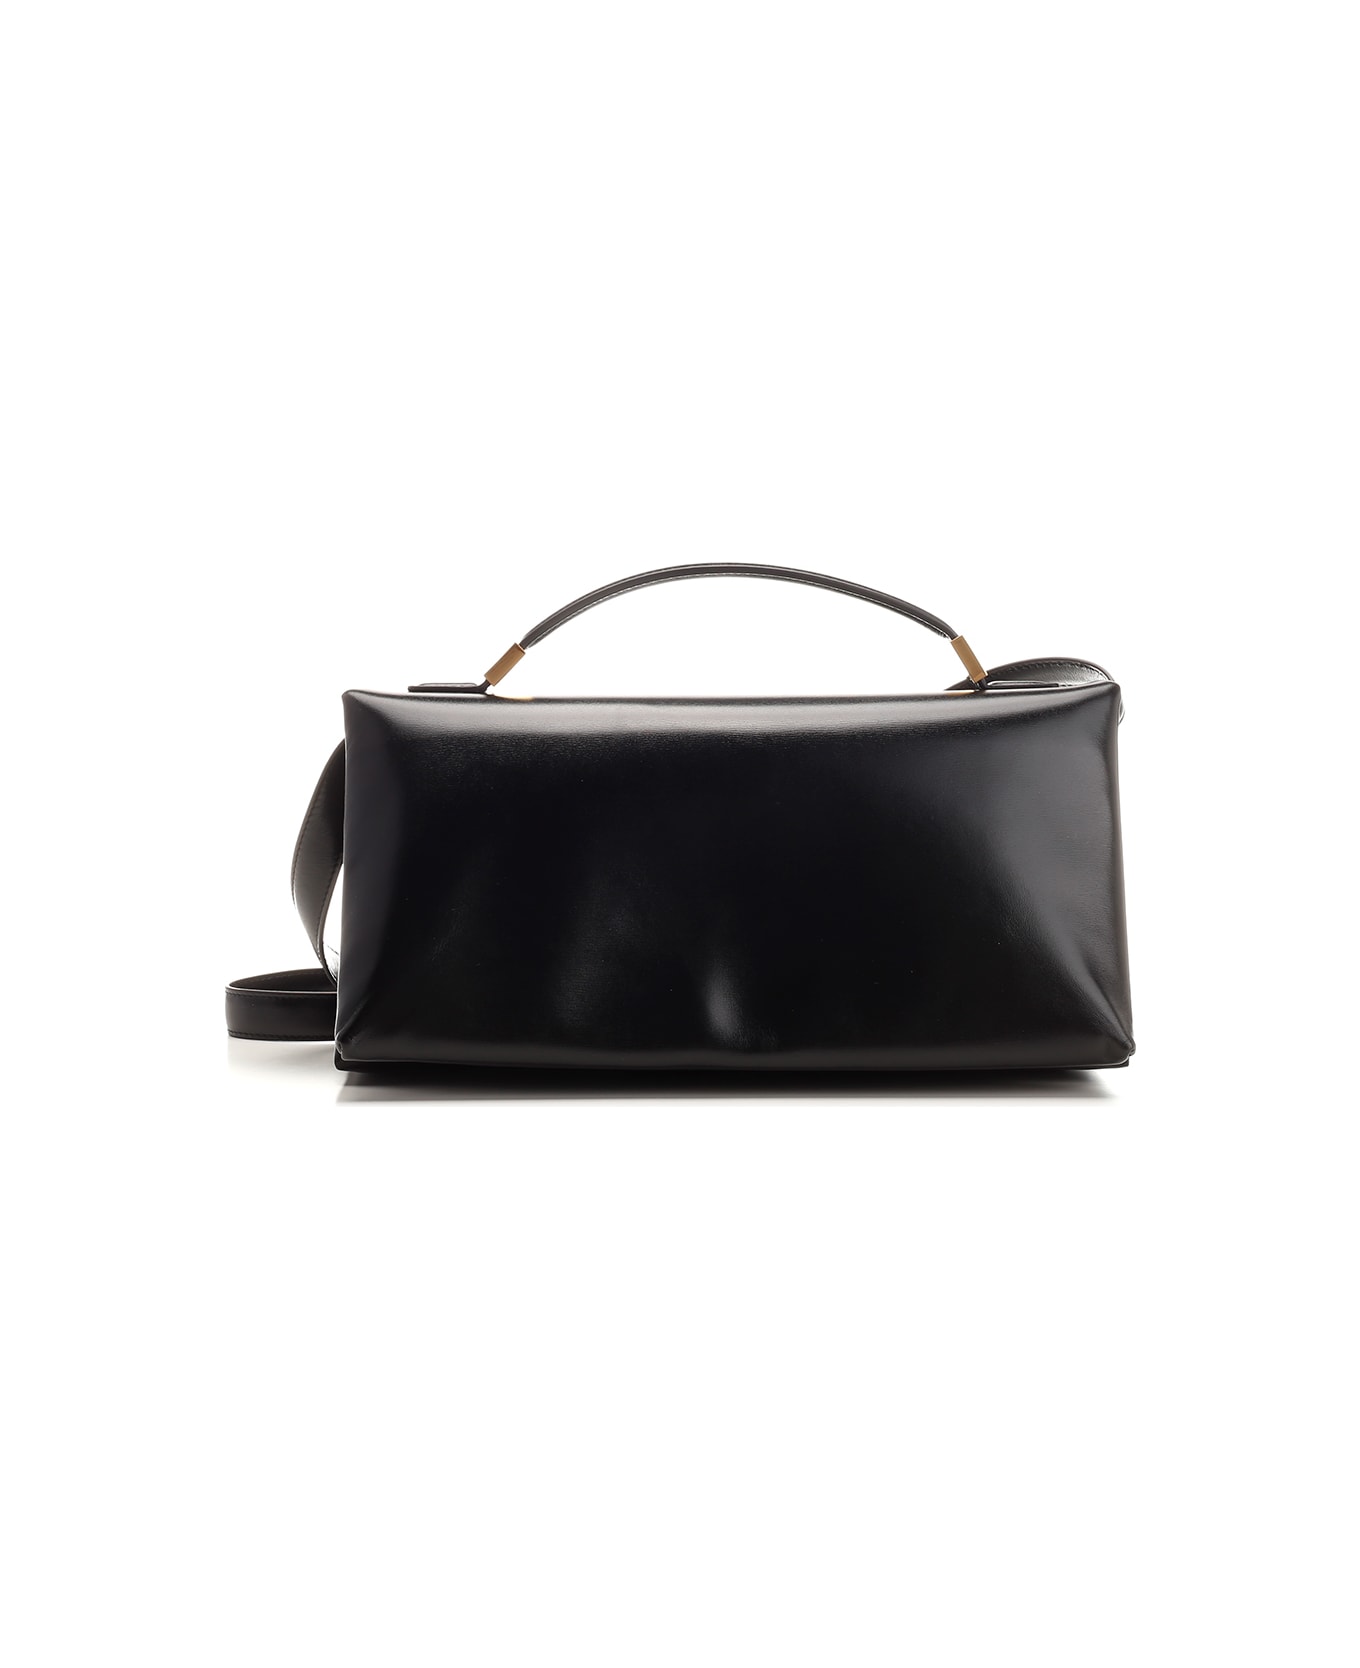 Marni Black 'prisma' Handbag Marni - BLACK